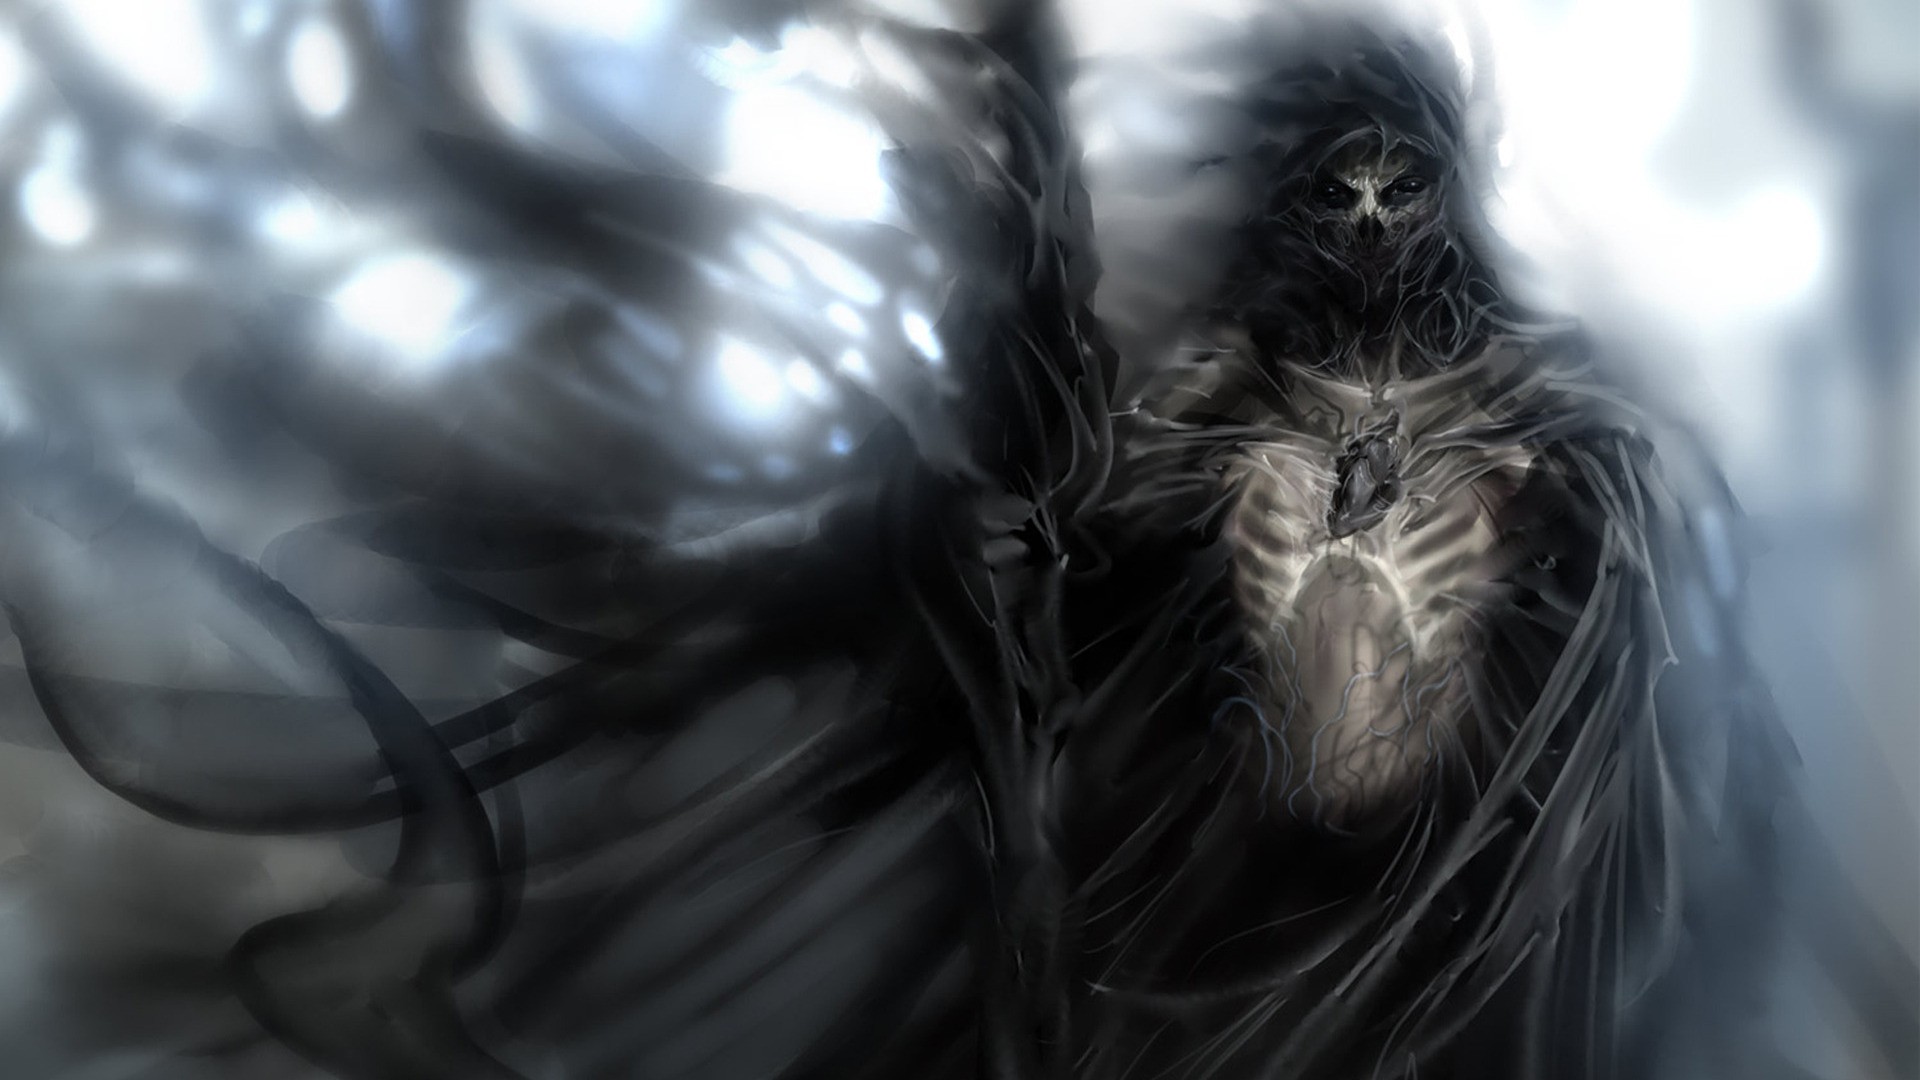 General 1920x1080 death fantasy art Grim Reaper skull dark fantasy artwork